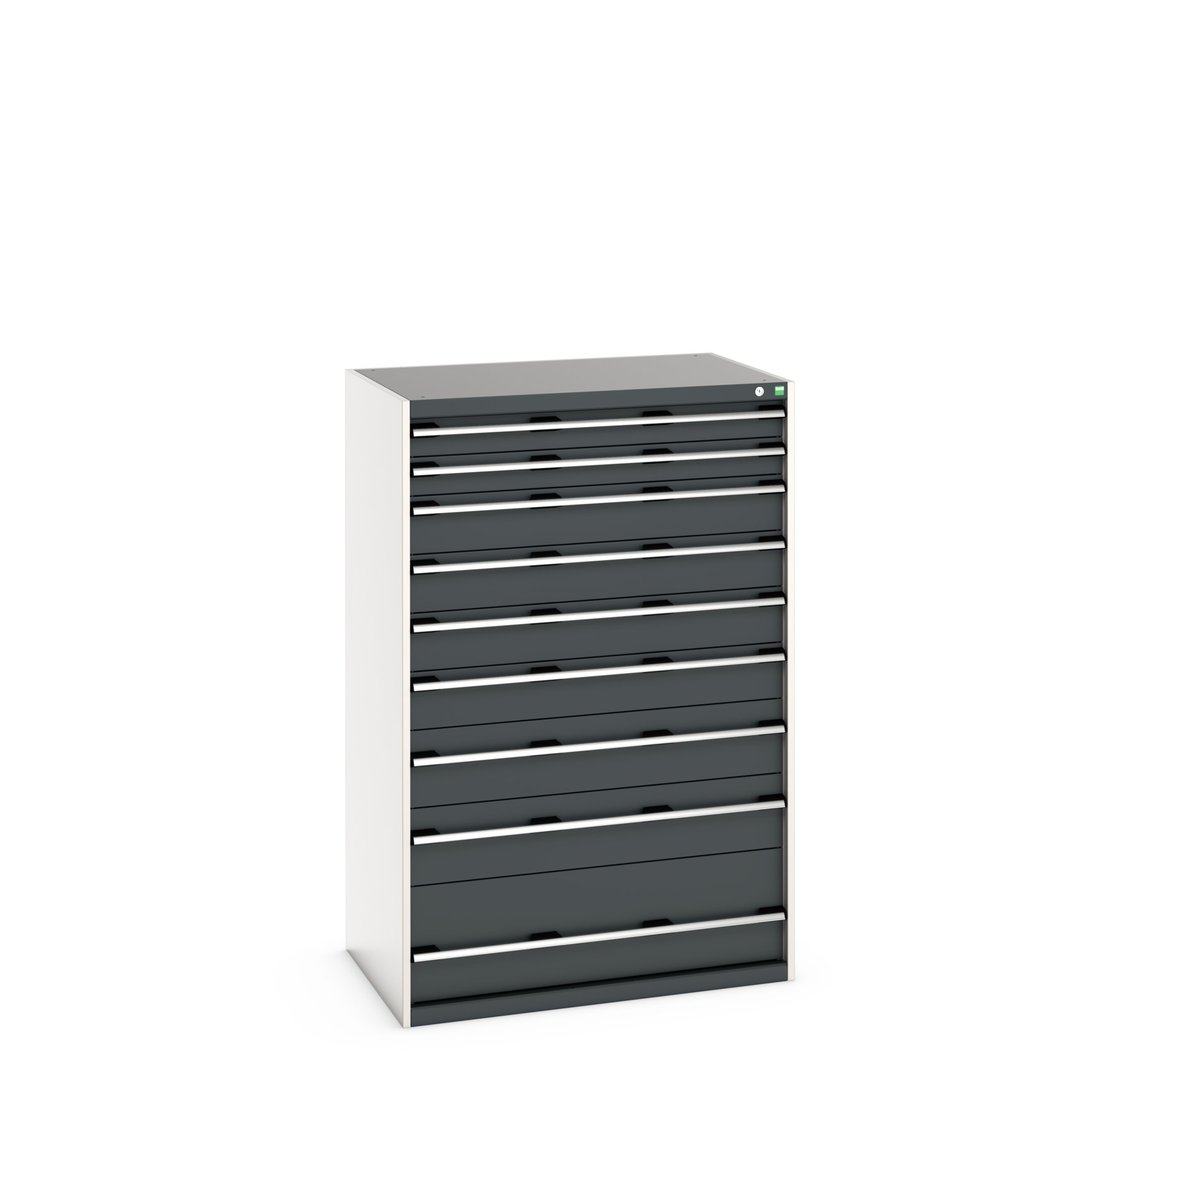 40029035. - cubio drawer cabinet